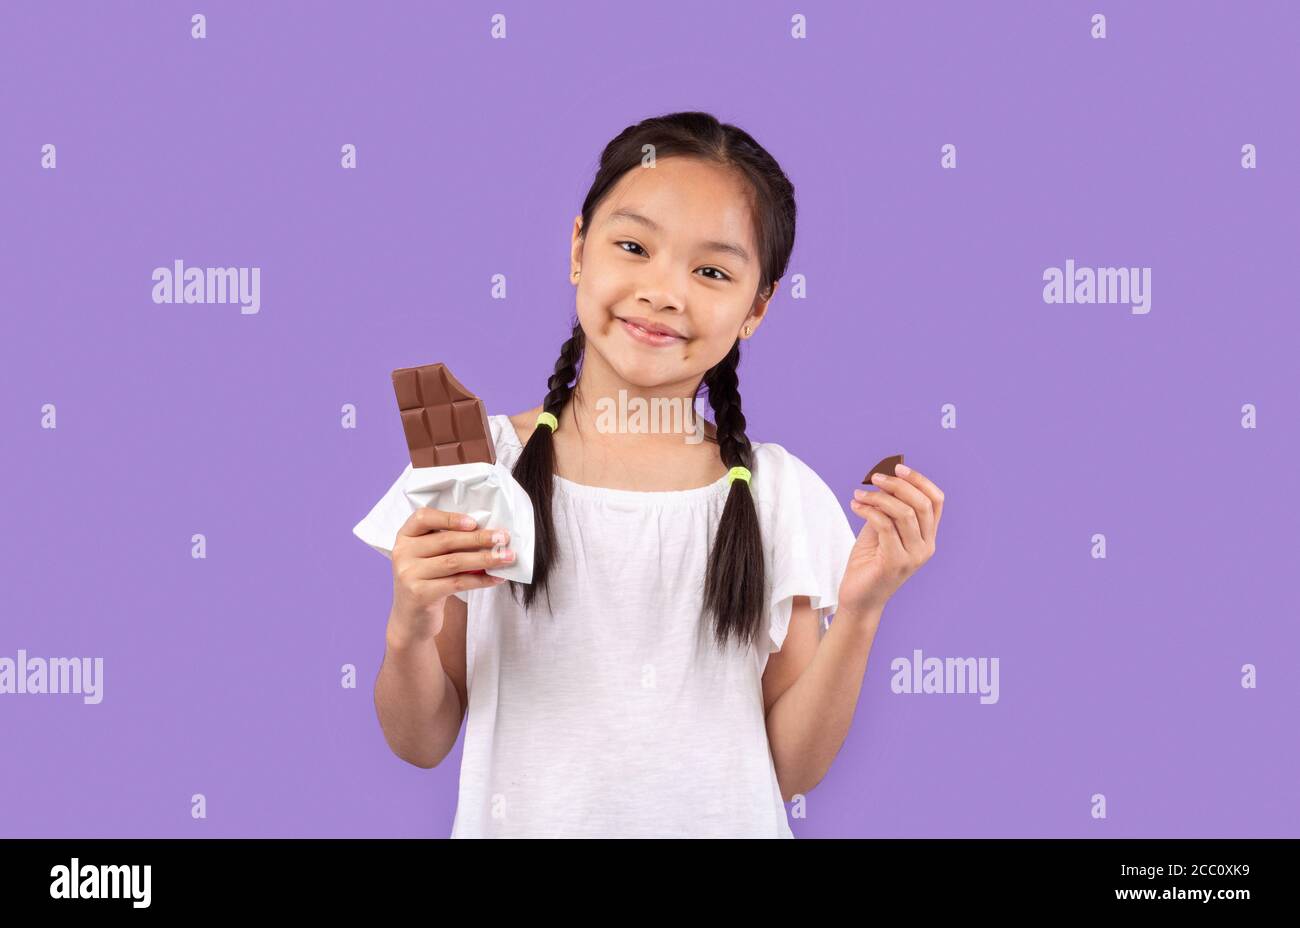 Chinese Girl Eating Chocolate Posing Over Purple Background In Studio Stock Photo